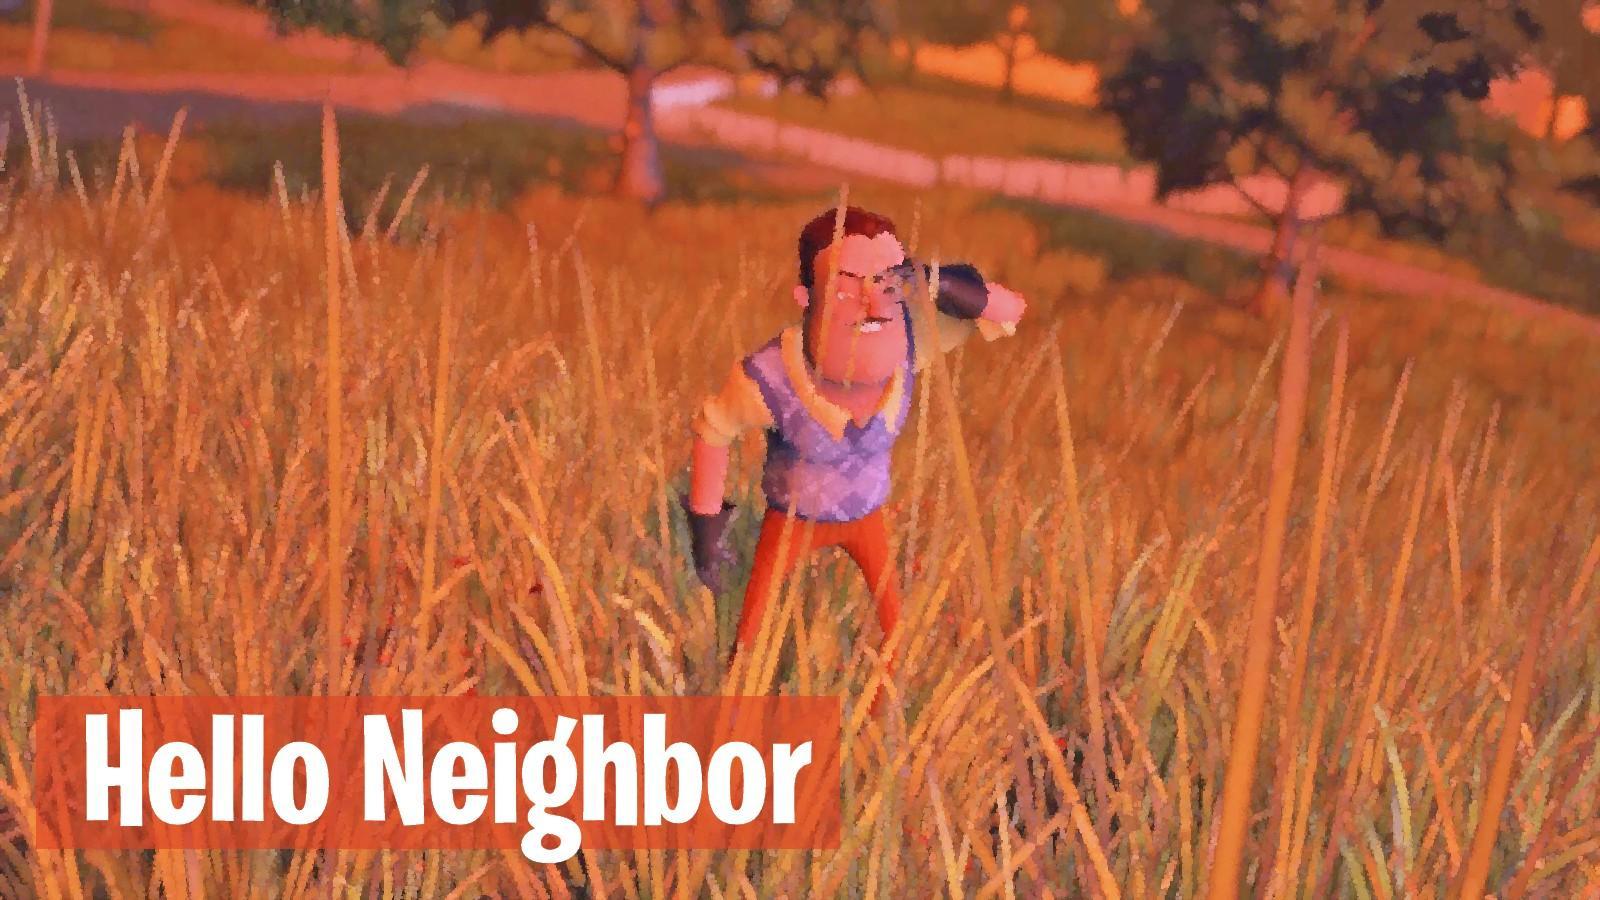 My Neighbor game. That's not my Neighbor игра. My neighbour jason